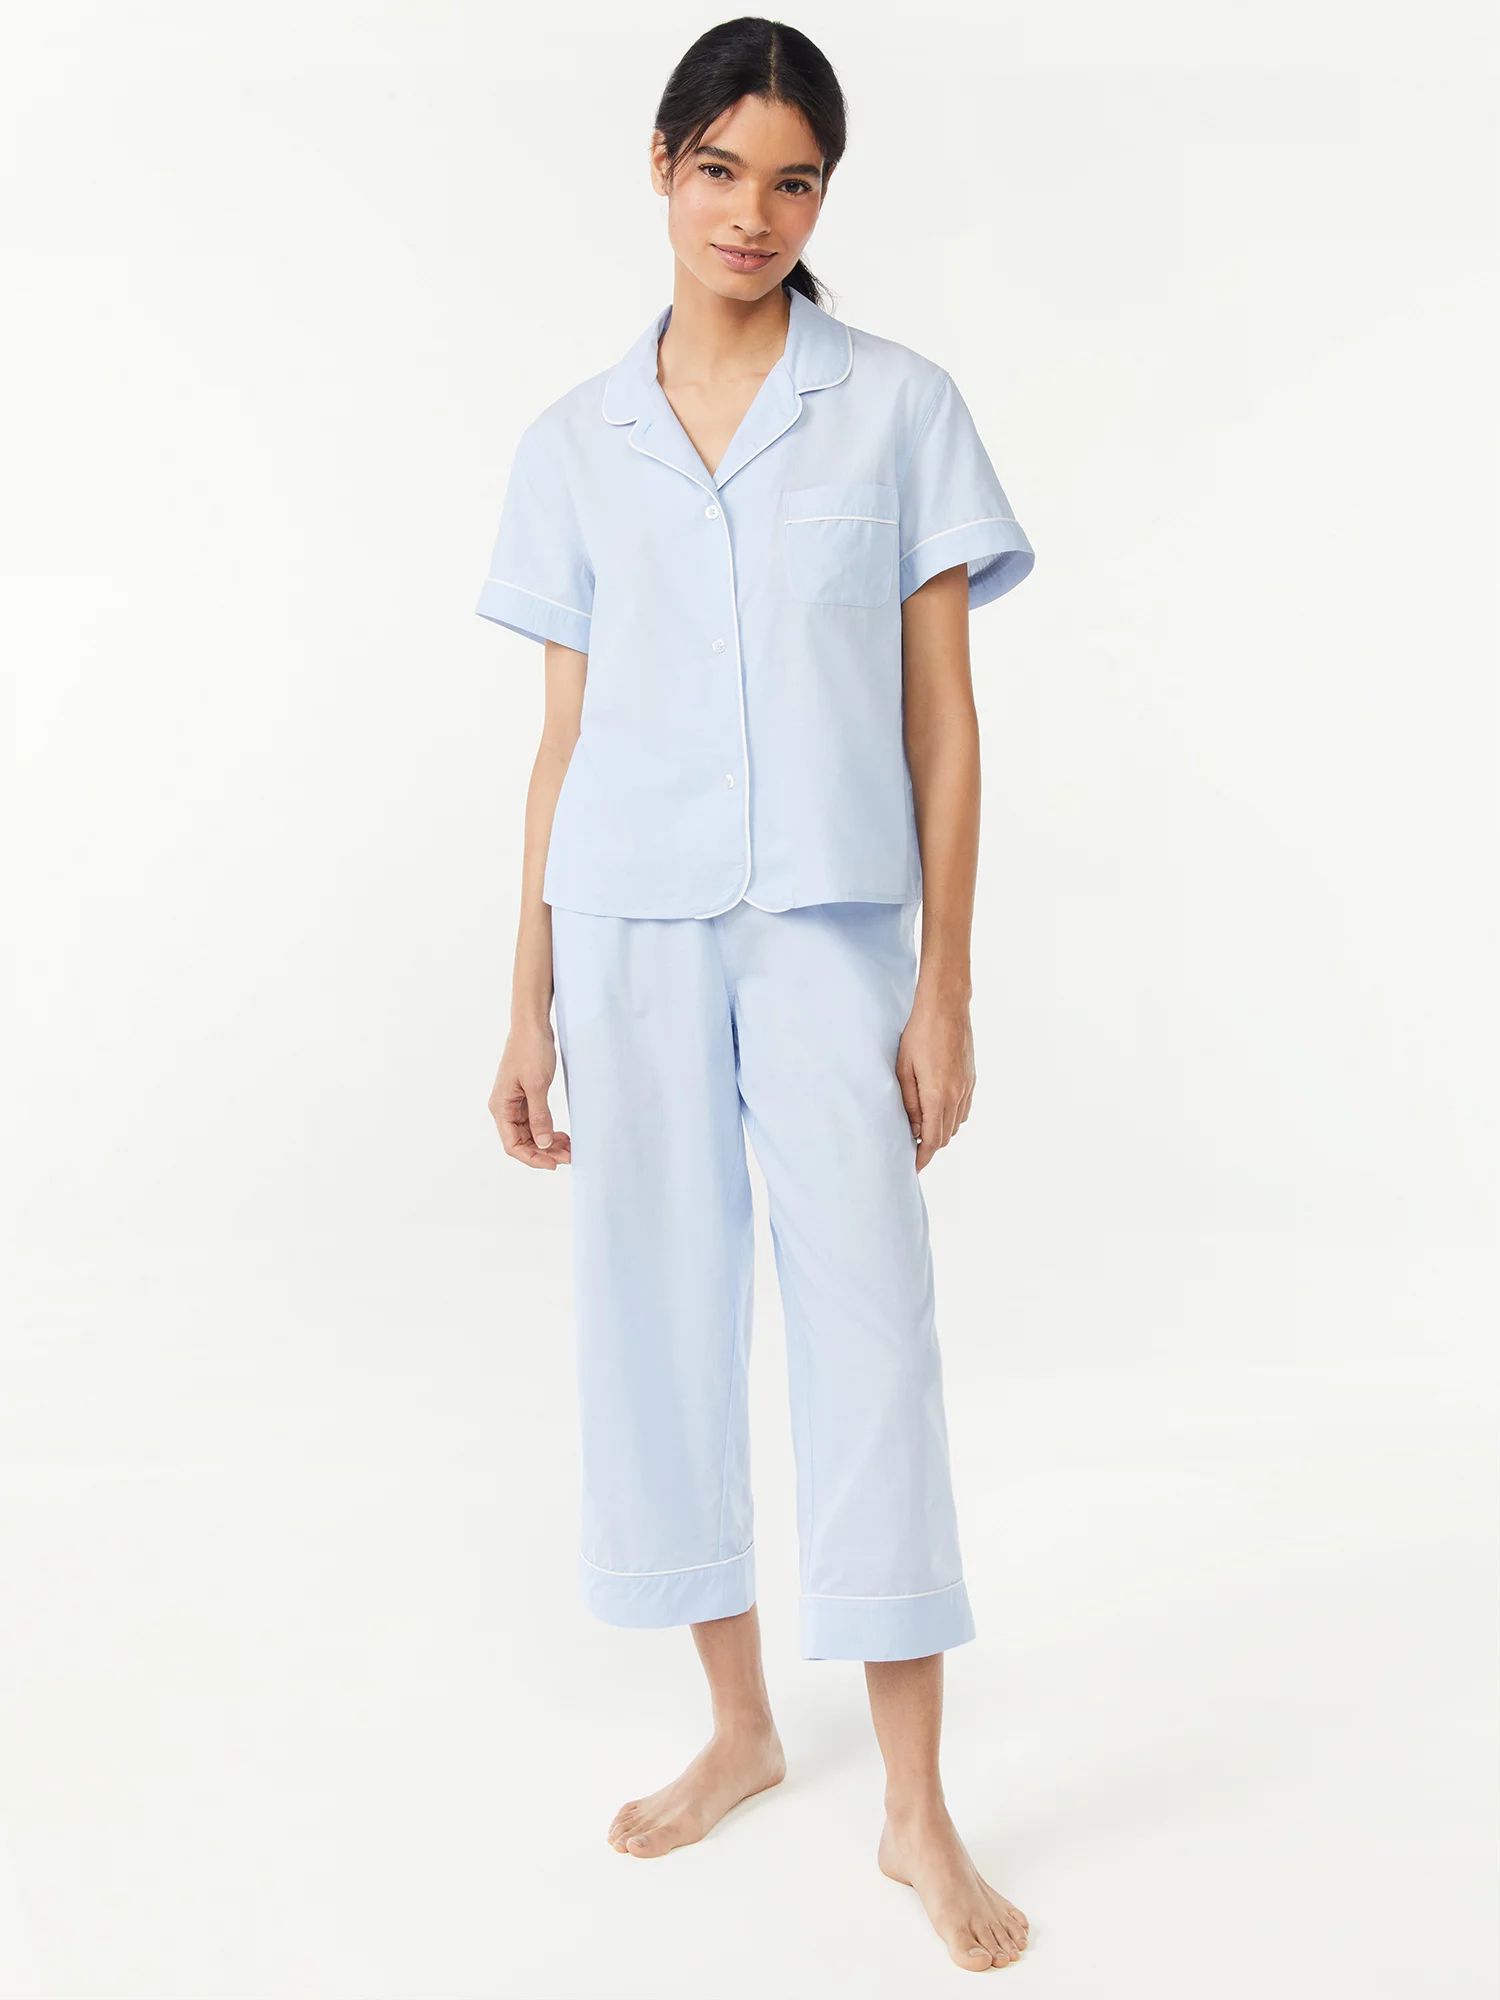 Joyspun Women's Woven Notch Collar Top and Capri Pajama Set, Sizes S to 3X | Walmart (US)